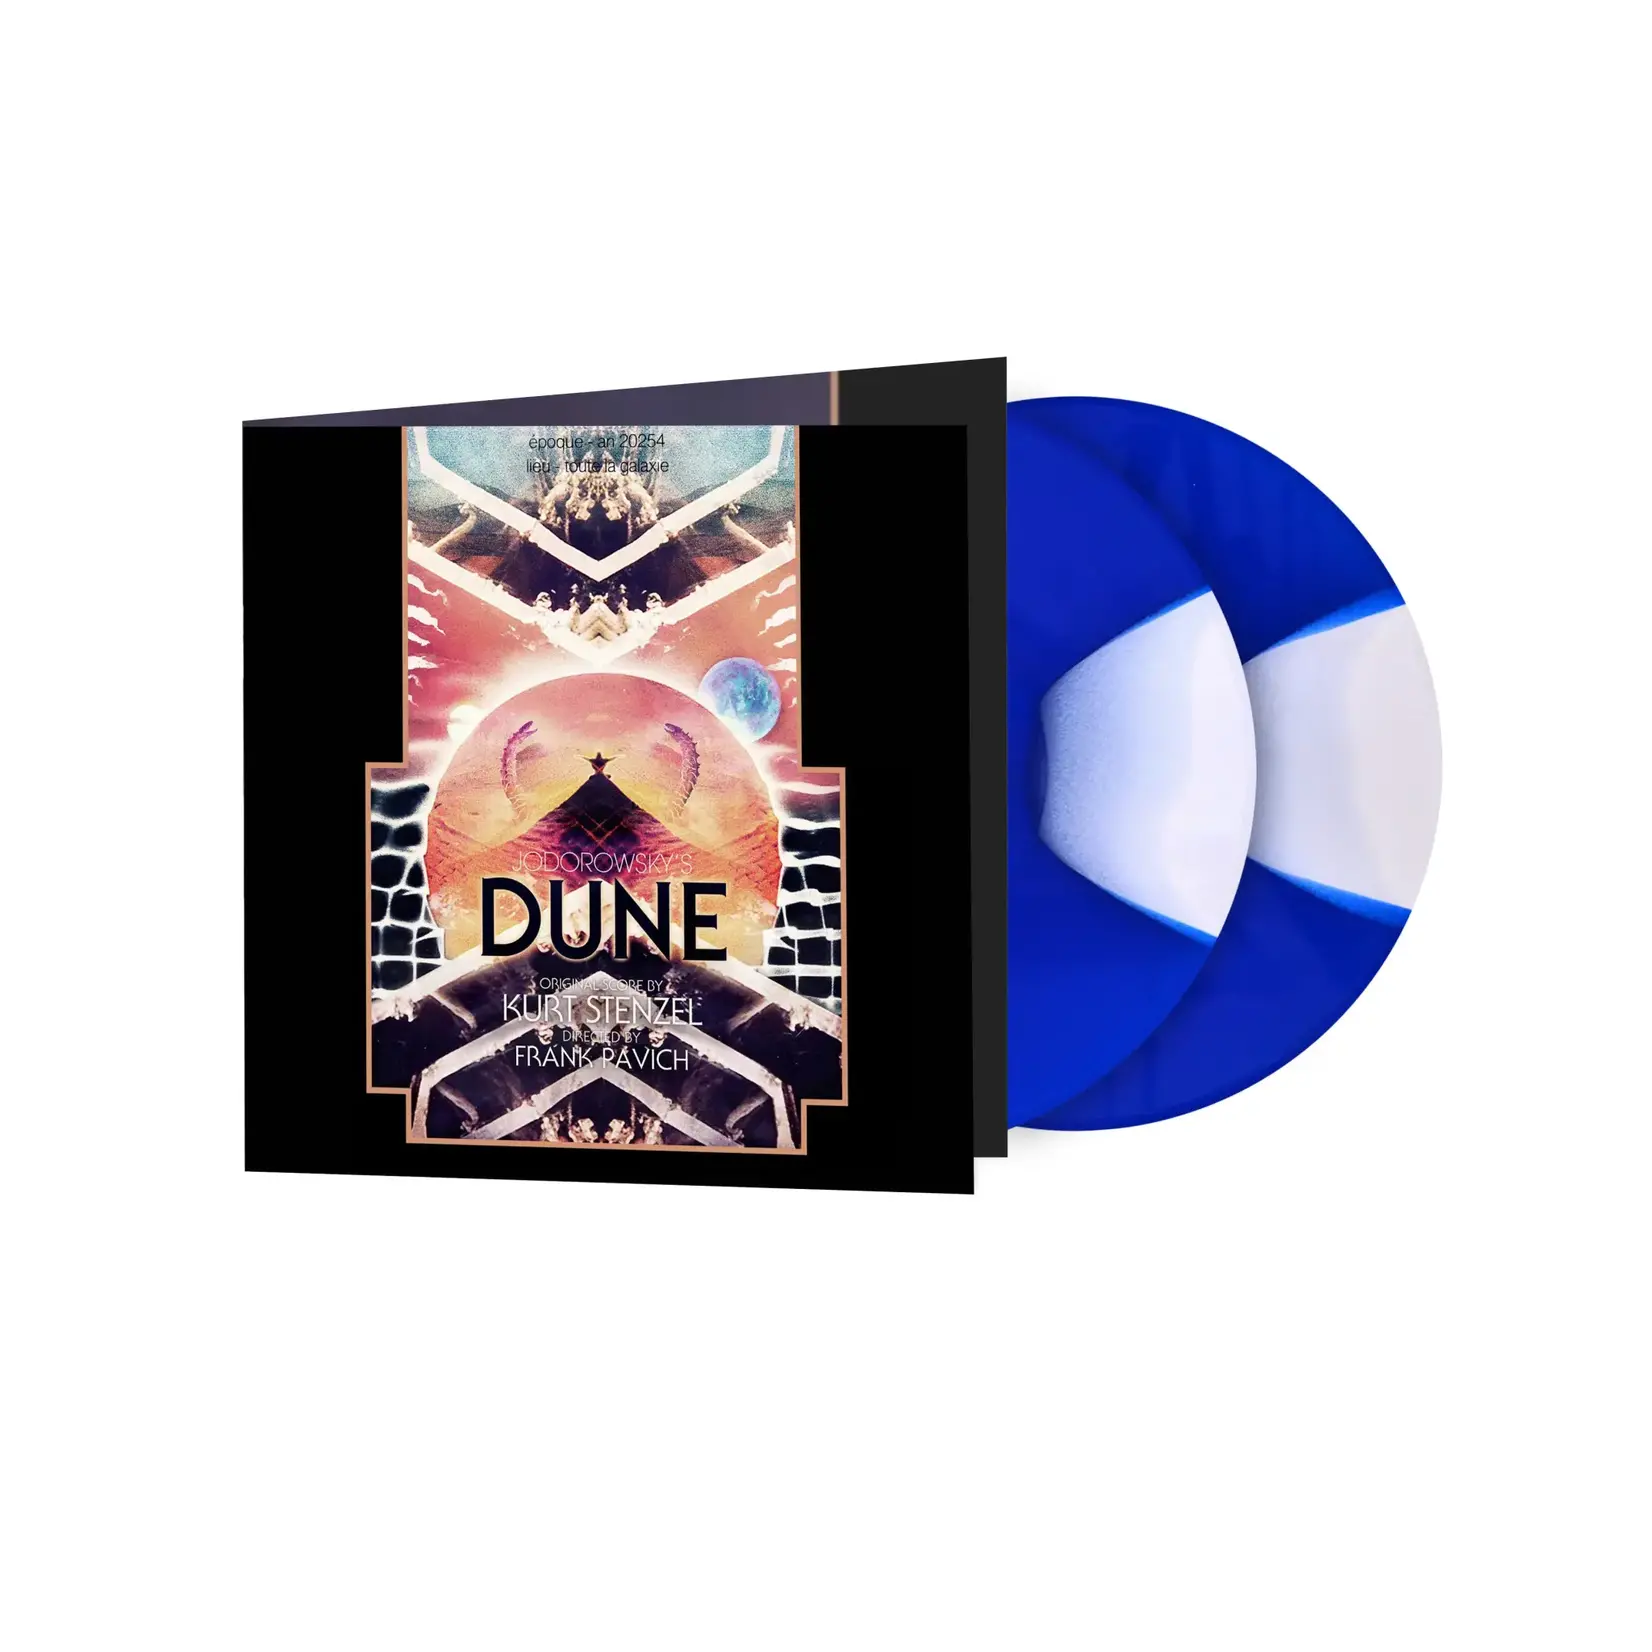 [New] Kurt Stenzel - Jodorowsky's Dune  (2LP, soundtrack, transparent blue with white vinyl)